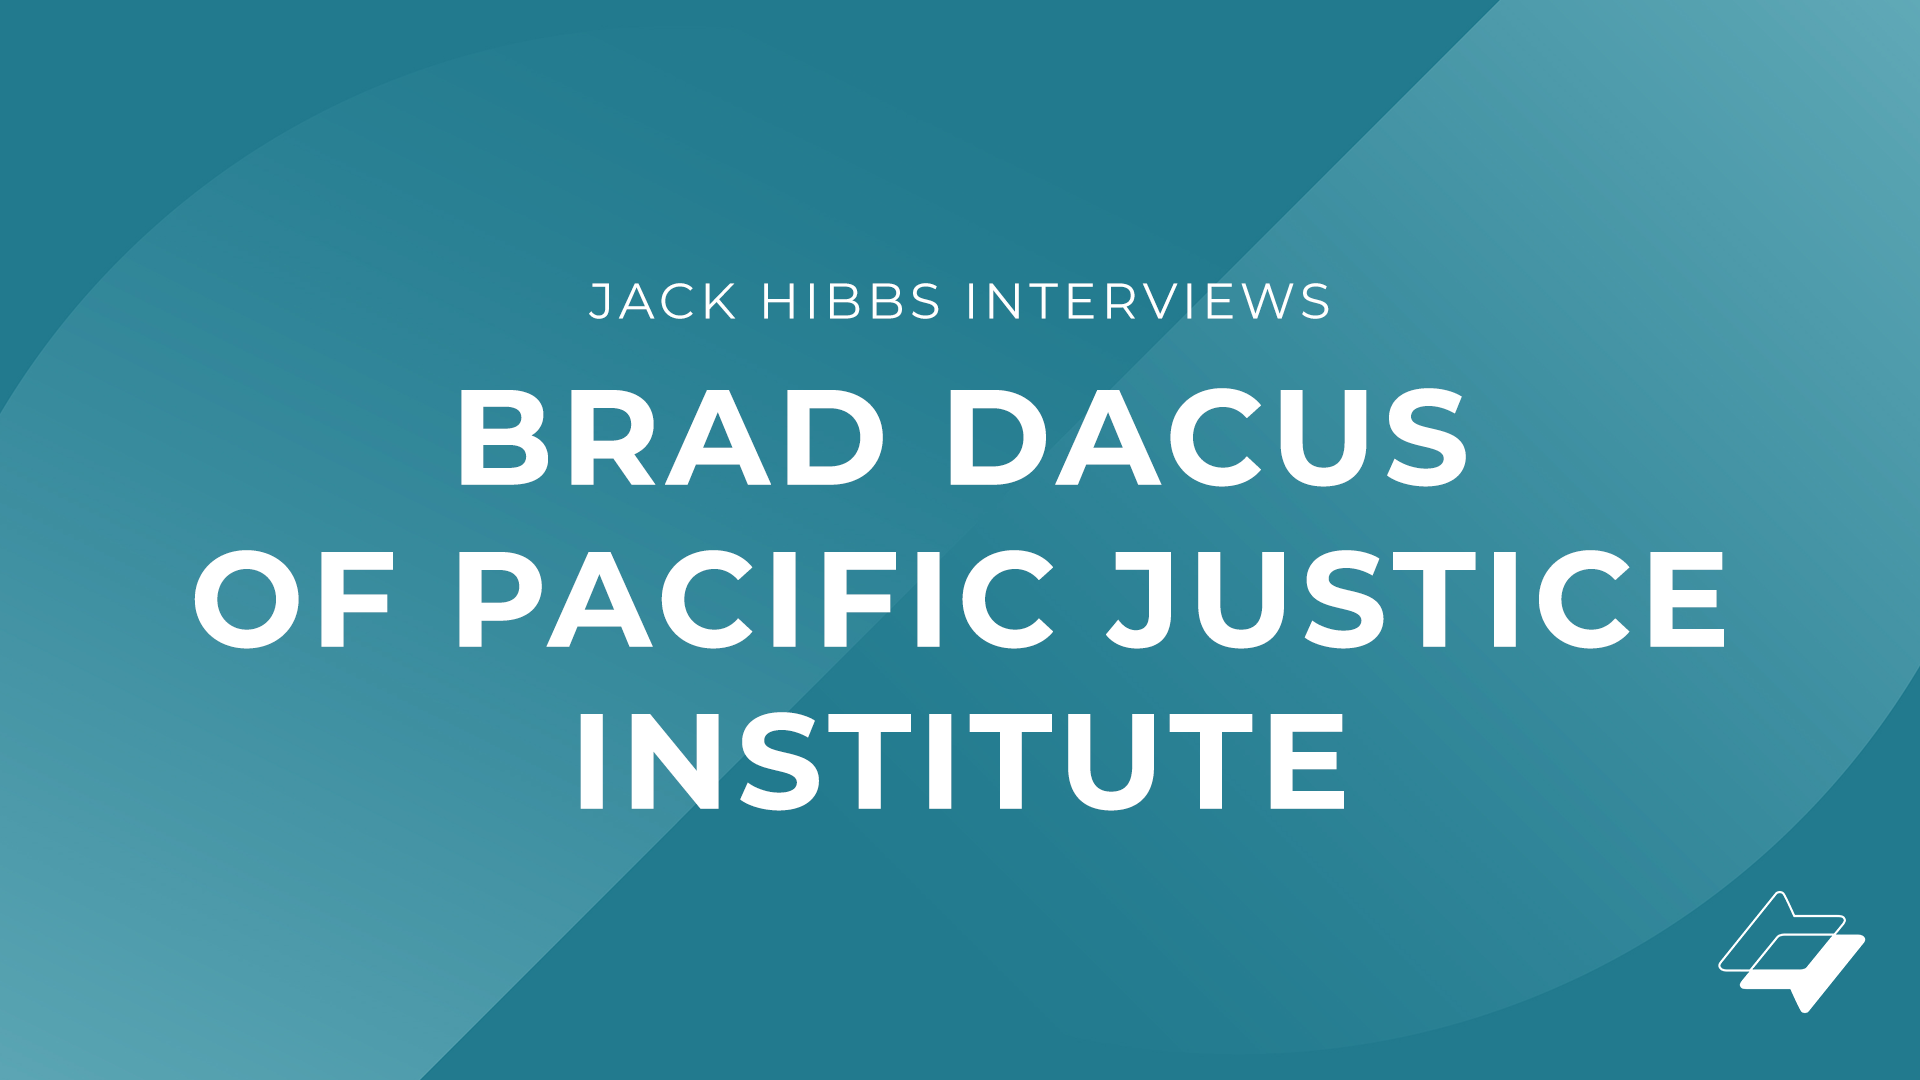 Jack Hibbs interviews Brad Dacus of Pacific Justice Institute